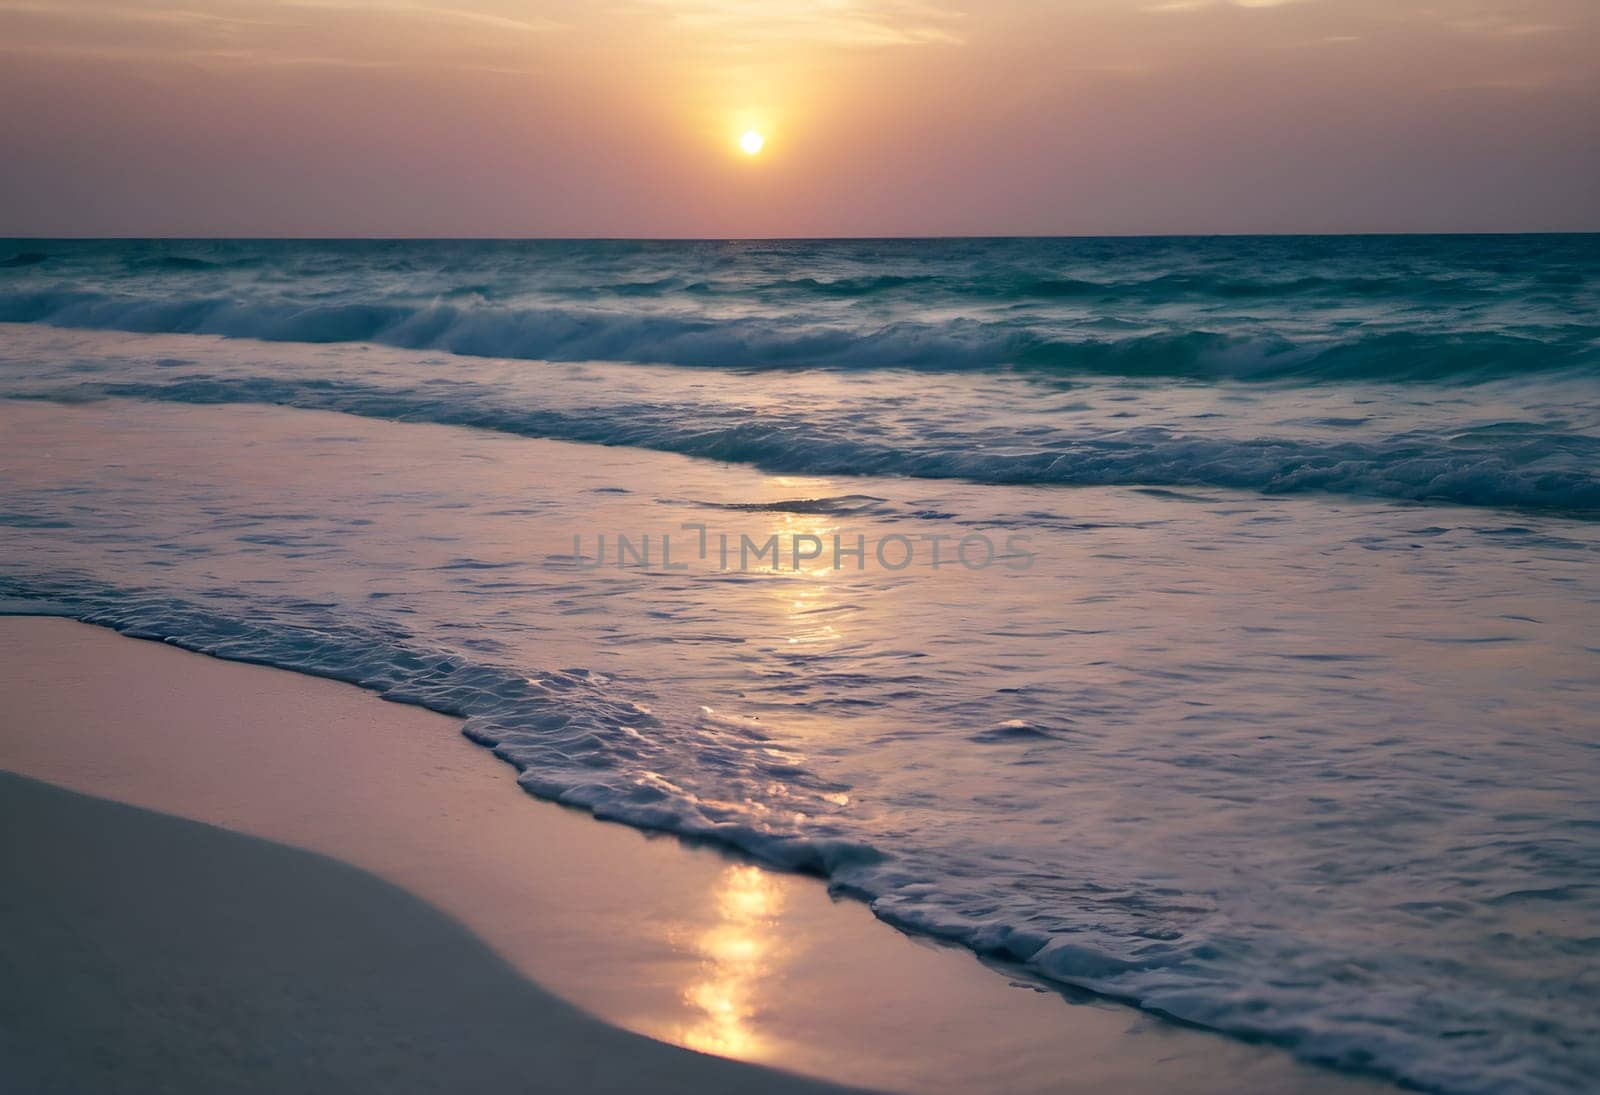 Dawn Delight: Capturing the Splendor of Cancun's Sunrise